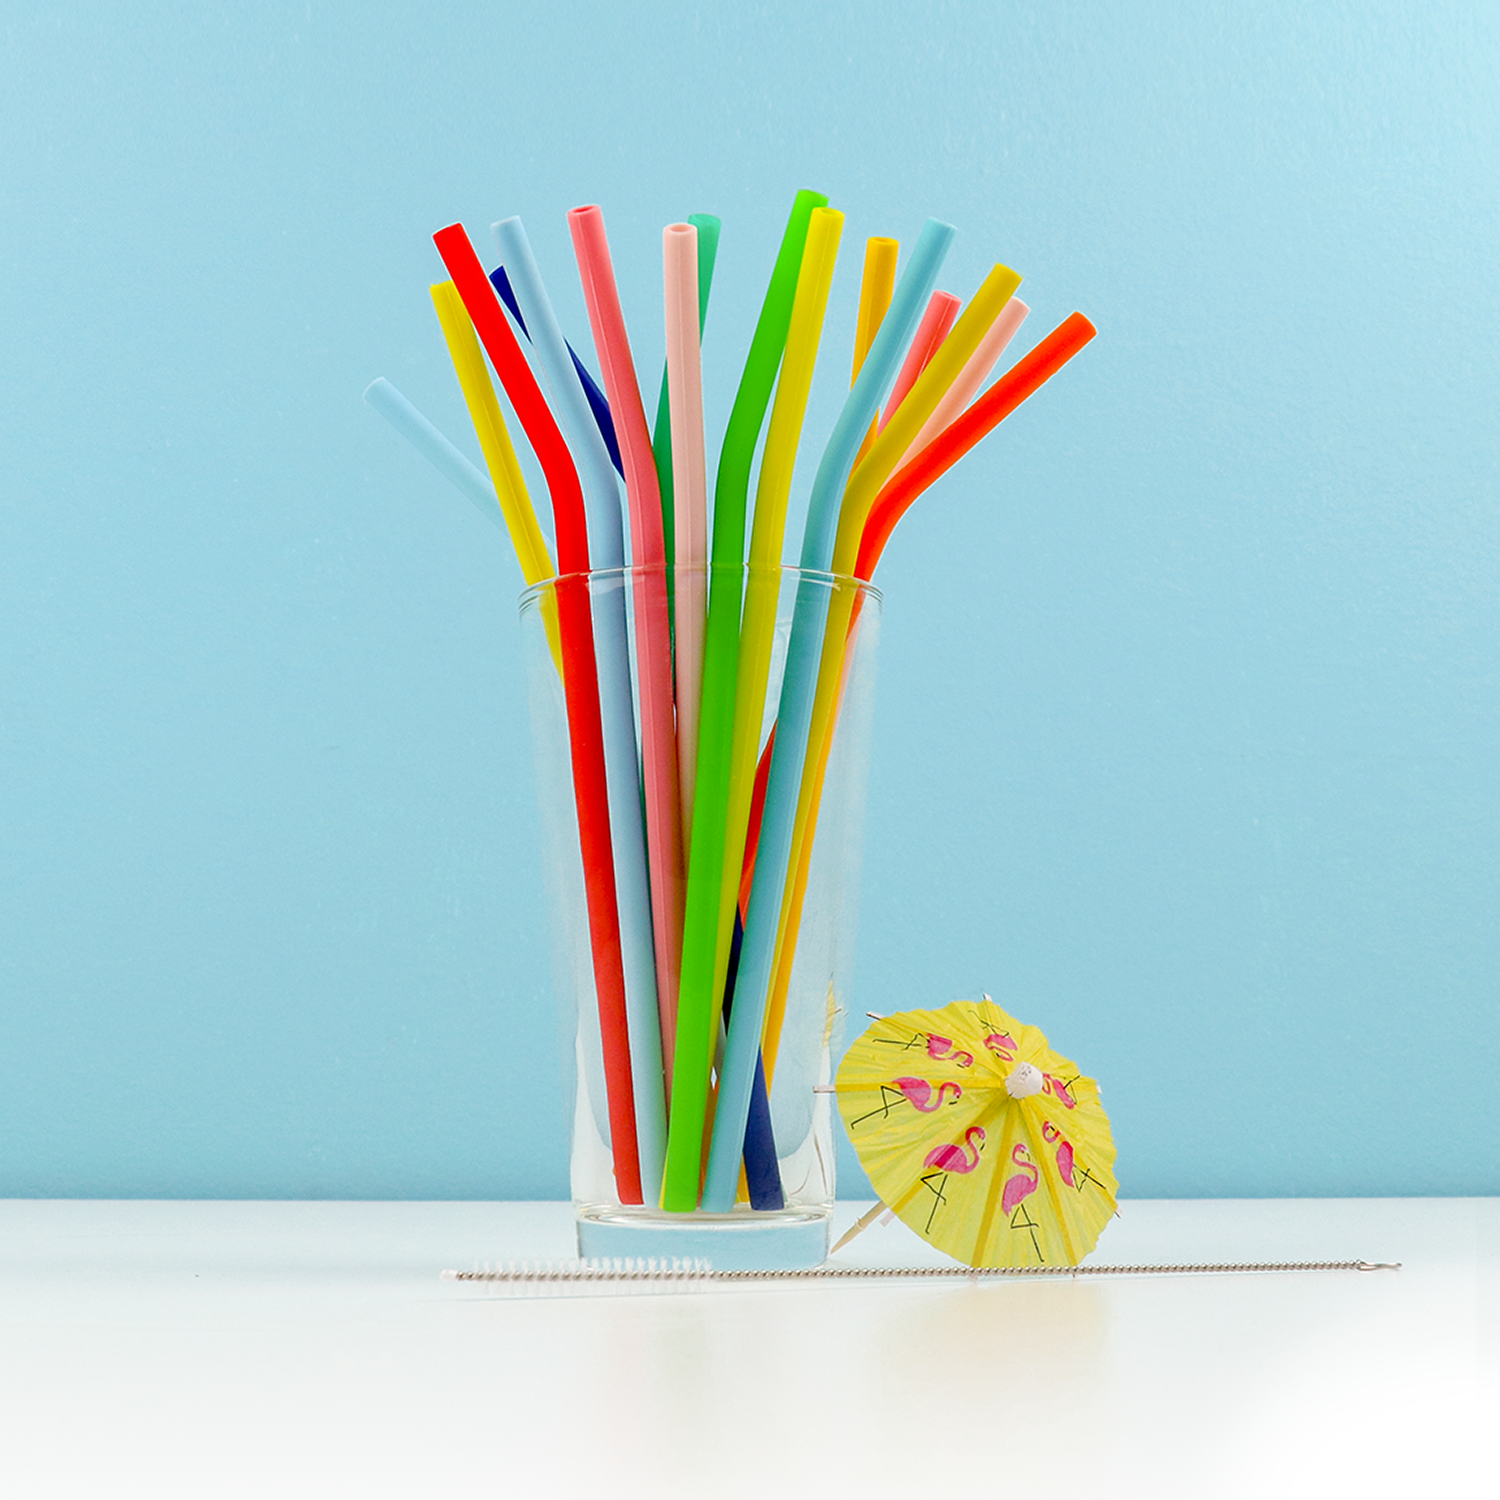 MOQ 100pcs Reusable Silicone Drinking Straws